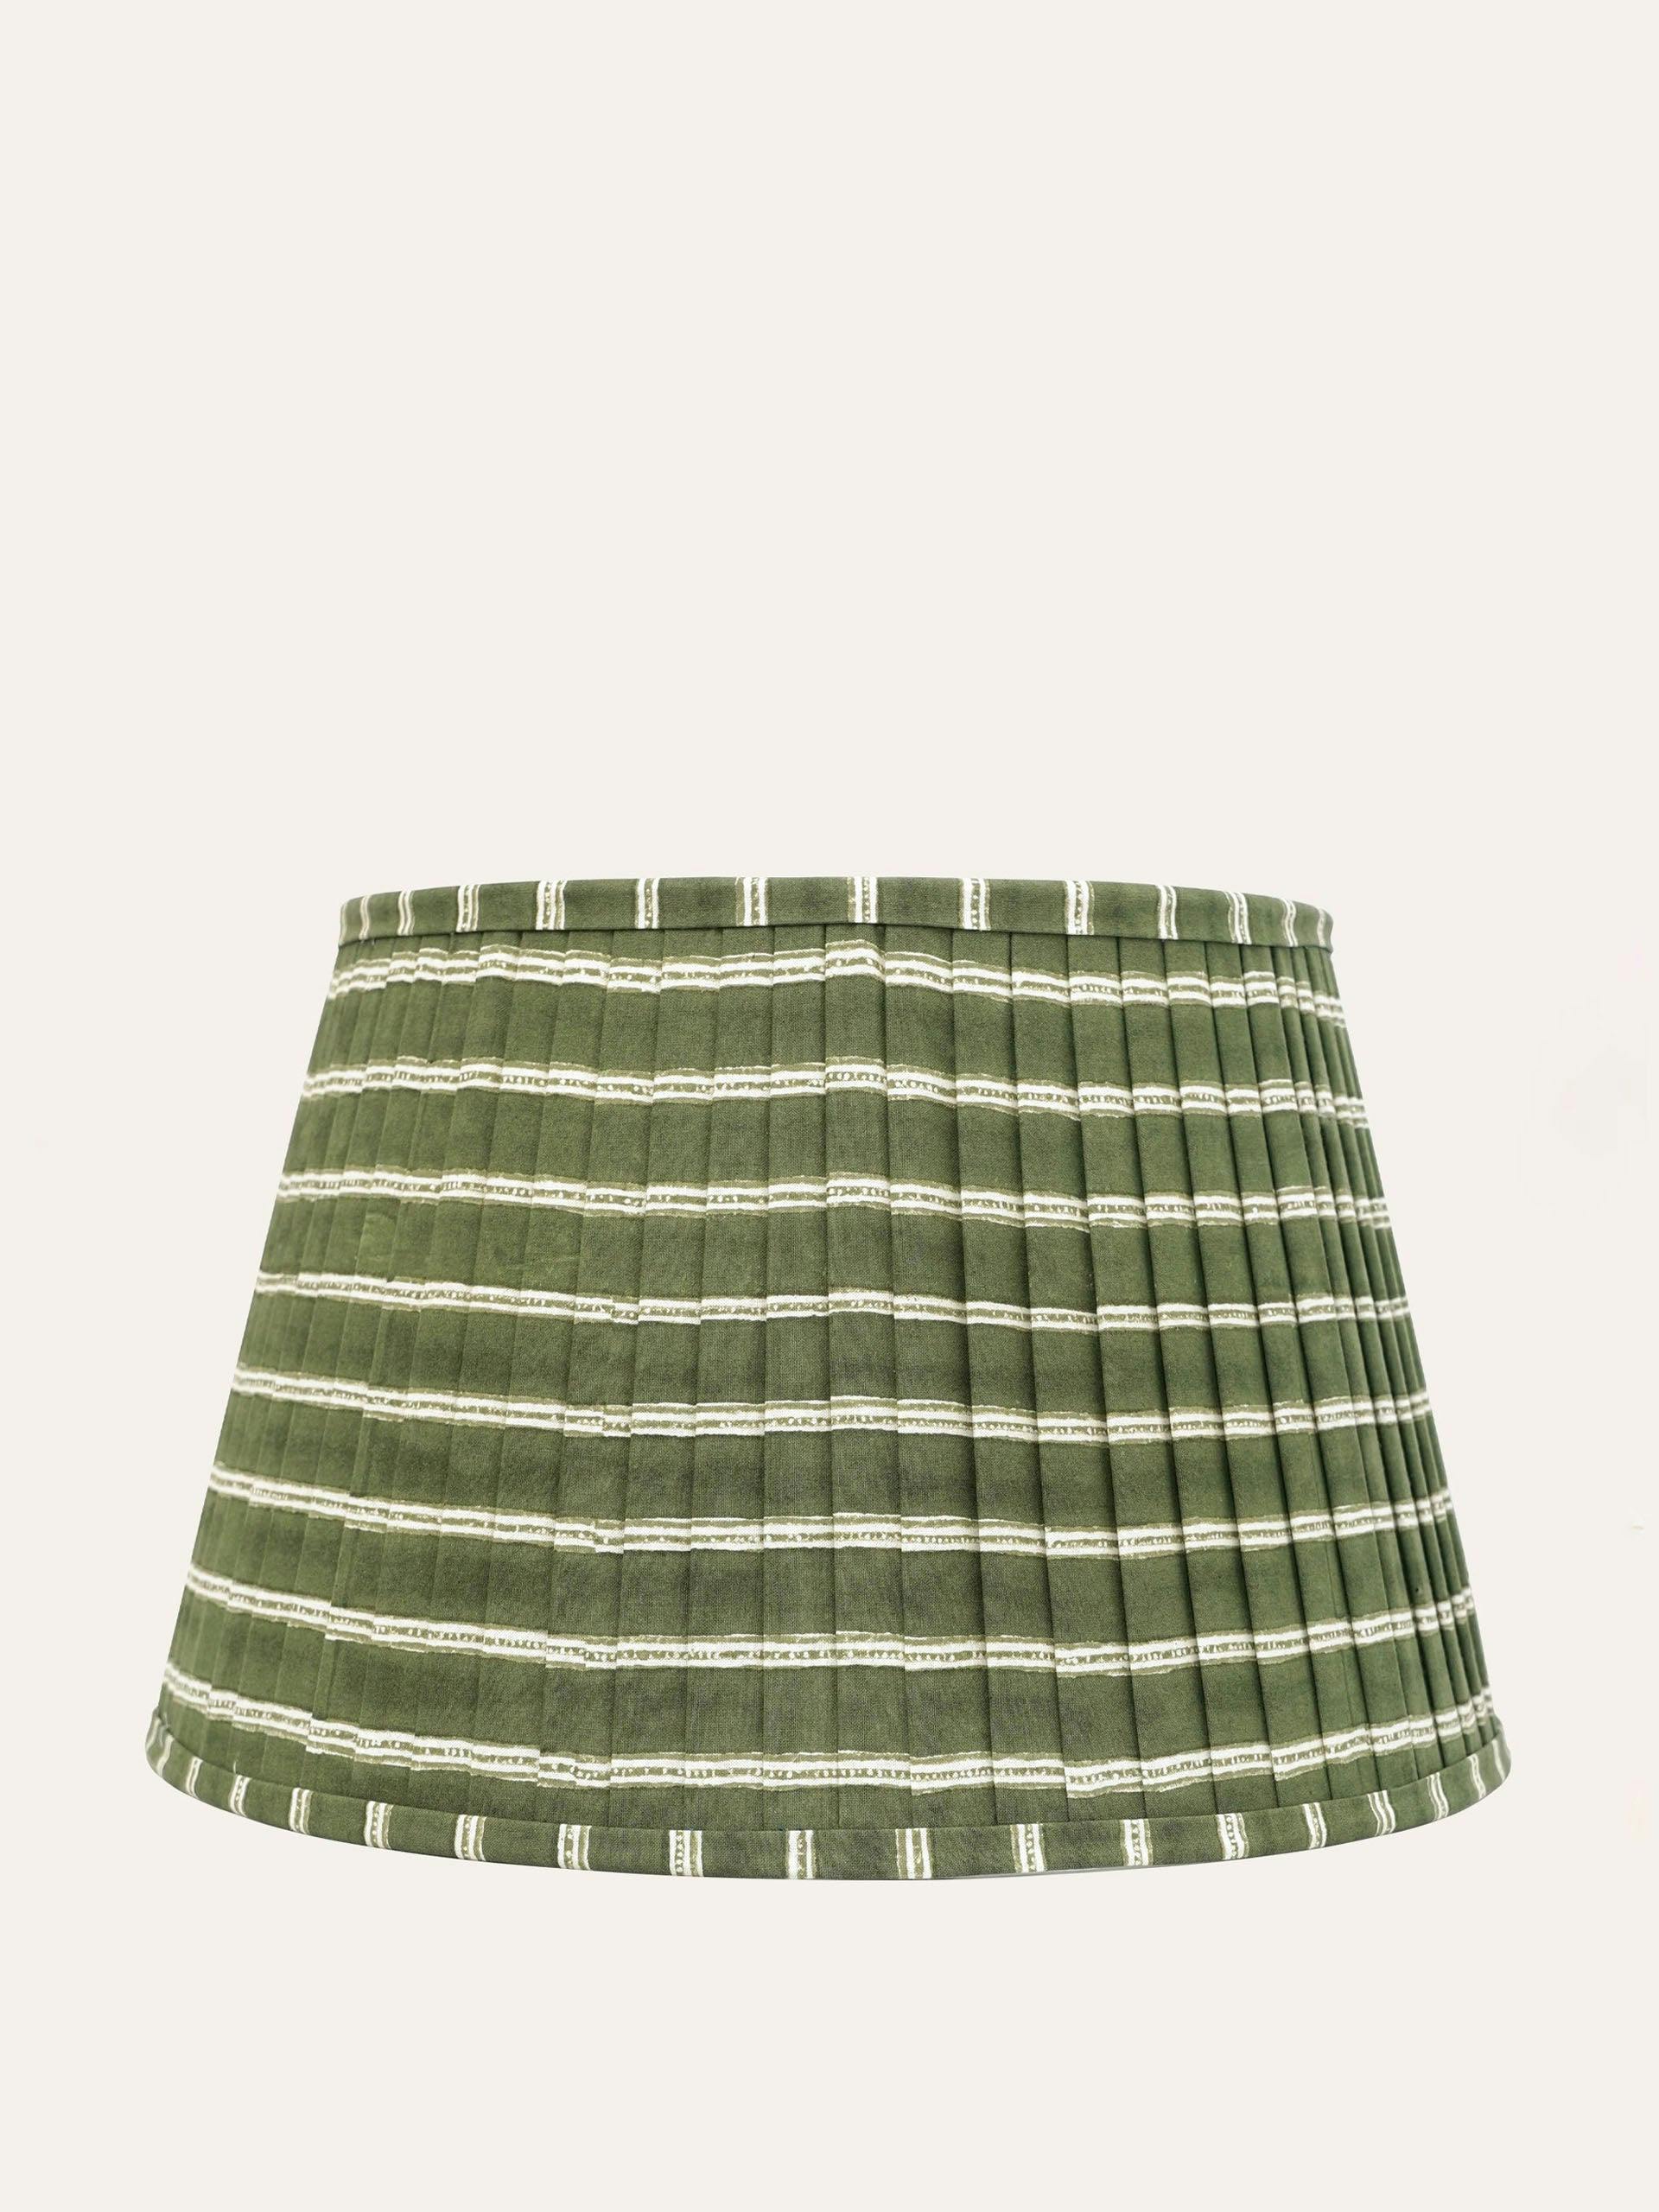 Green Edo stripe pleated lampshade